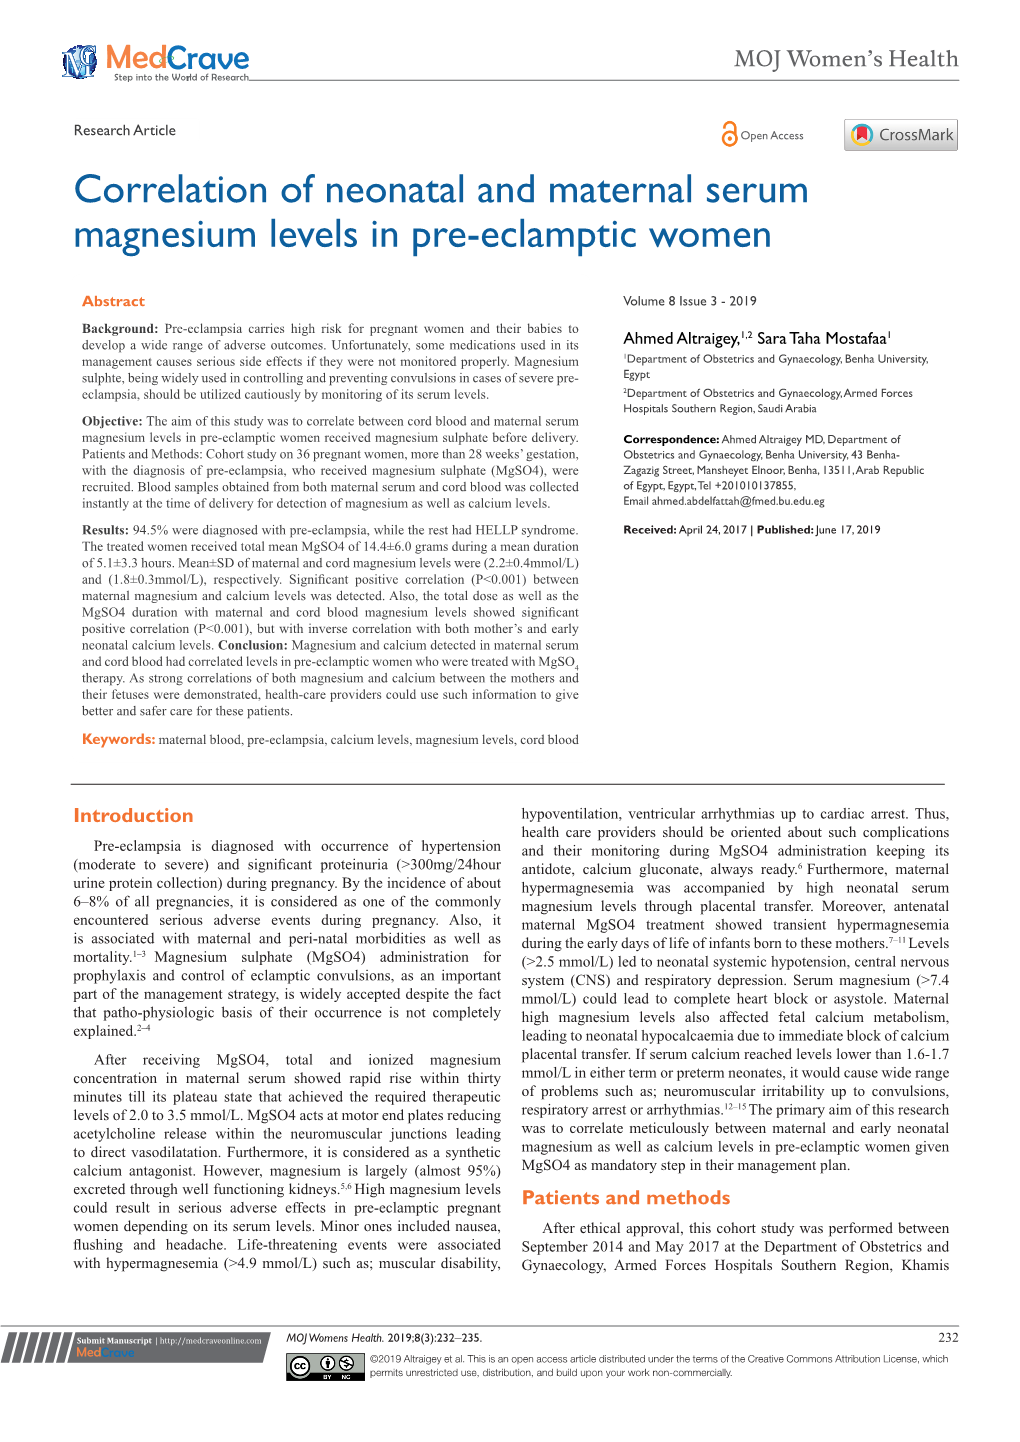 Correlation of Neonatal and Maternal Serum Magnesium Levels in Pre-Eclamptic Women